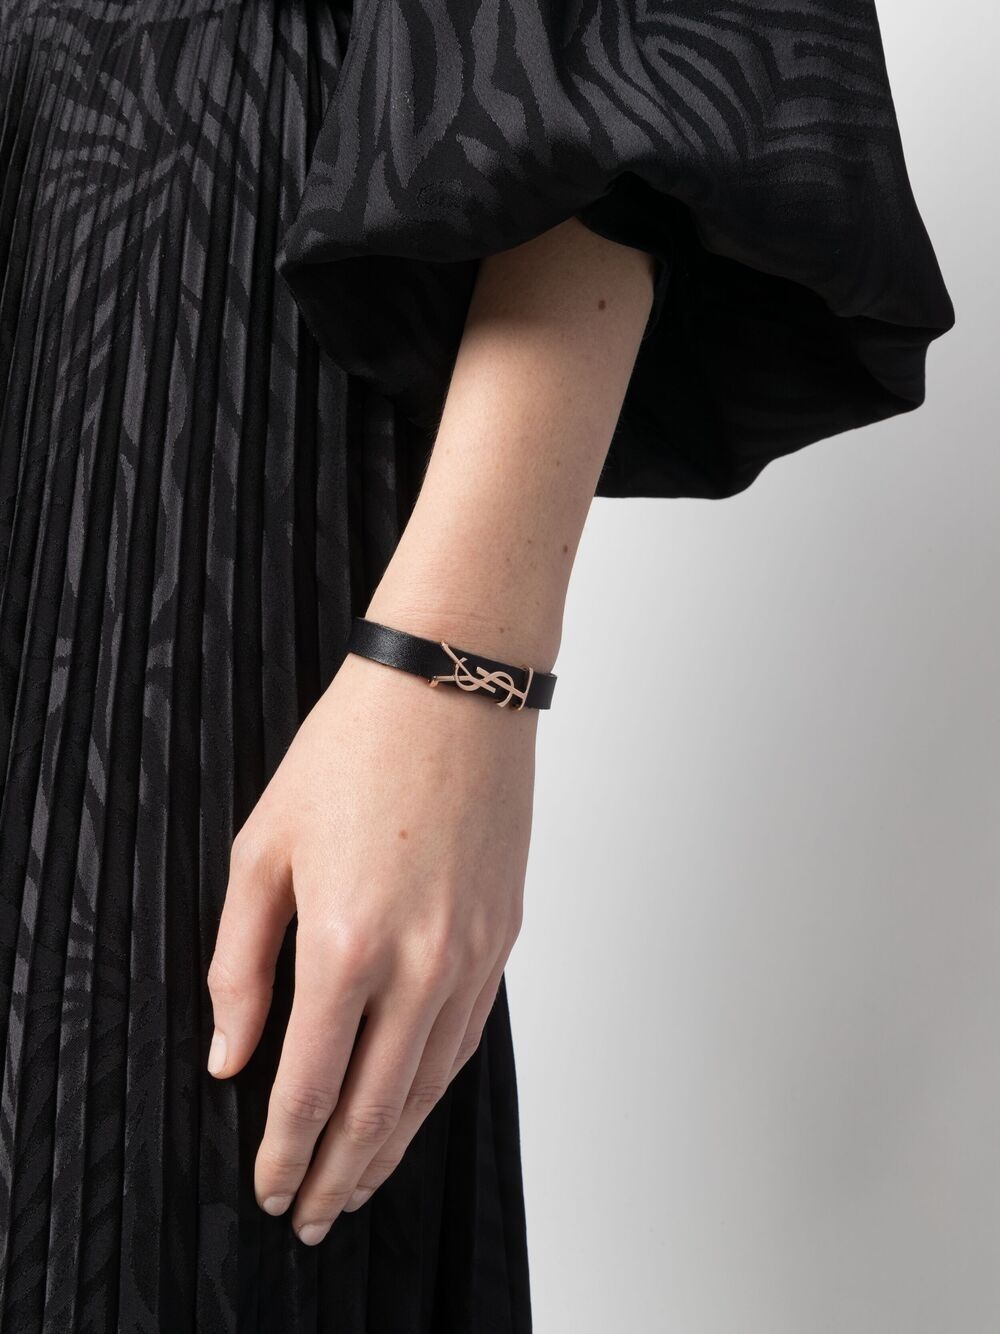 YSL logo leather bracelet - 2